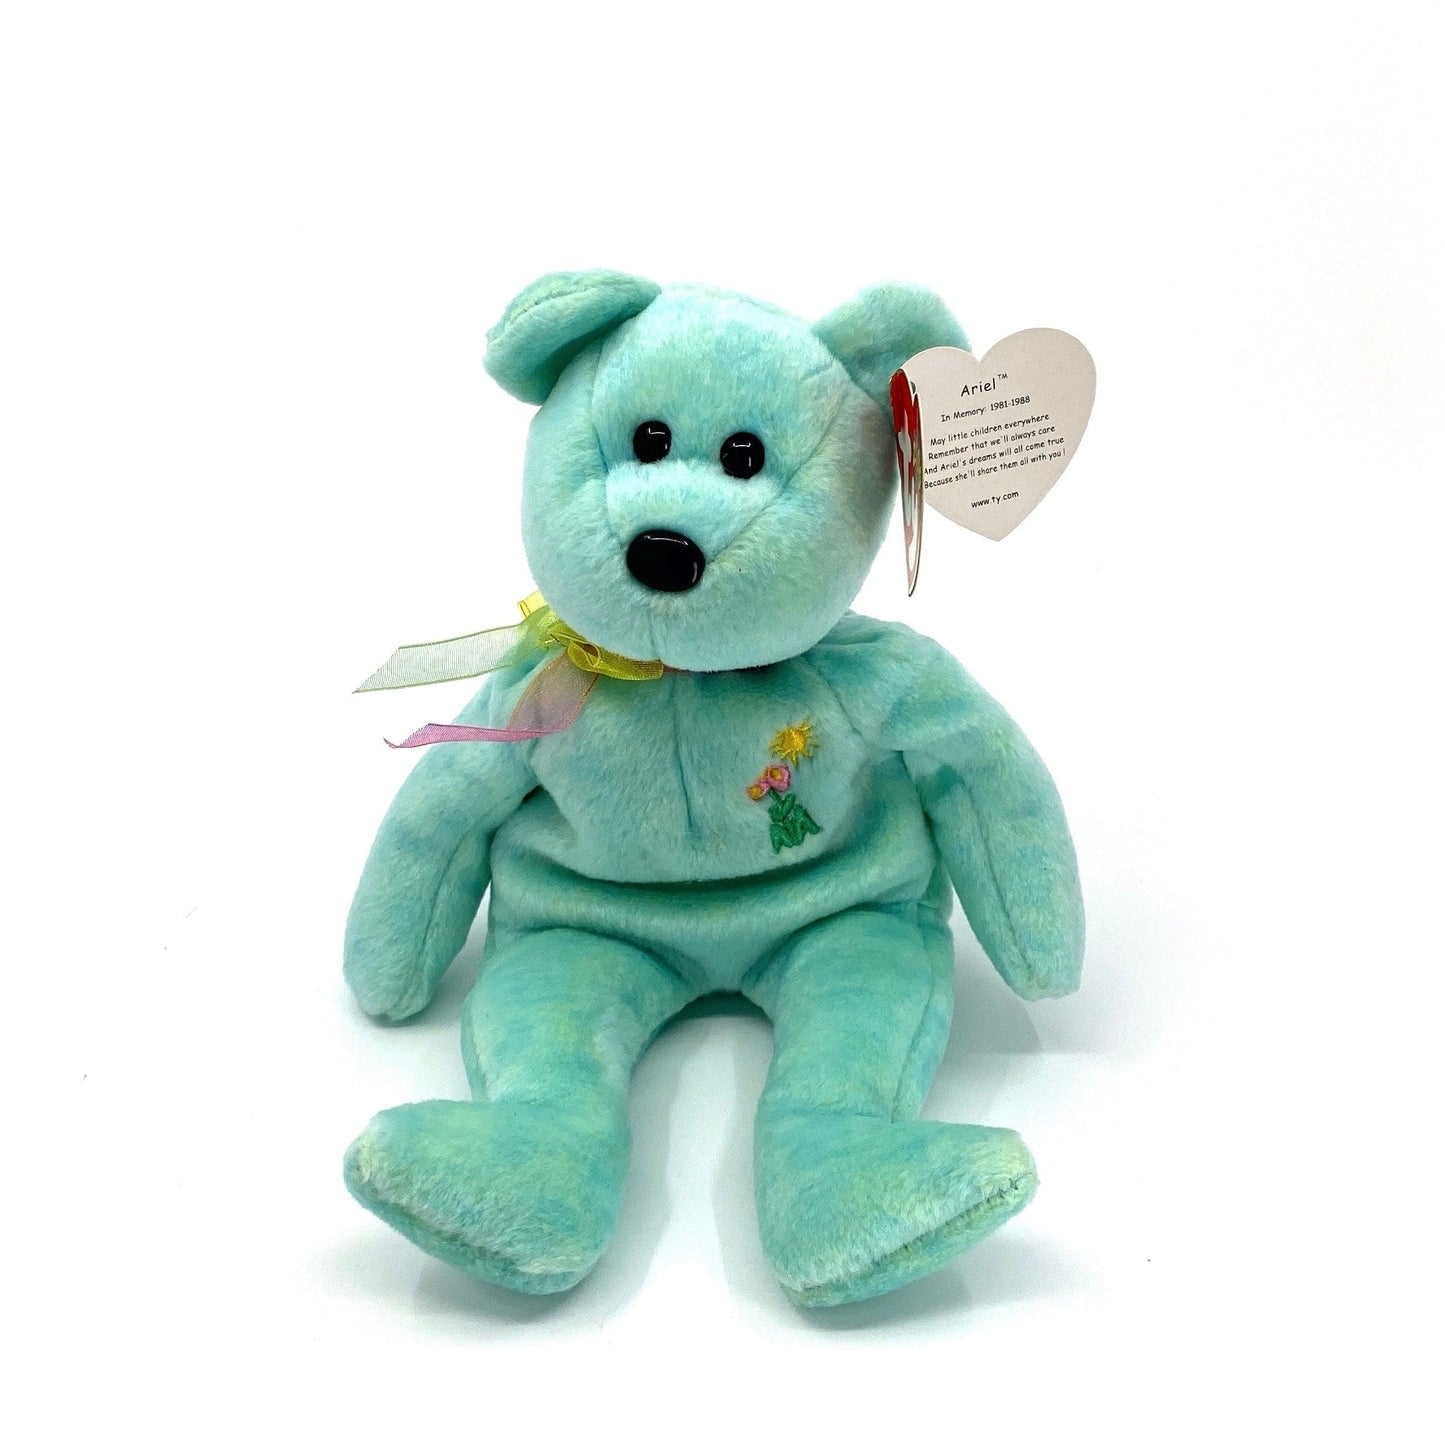 Charming Ty Original Beanie Babies 2000 ‘Ariel’ Bear Plush Toy - Vintage